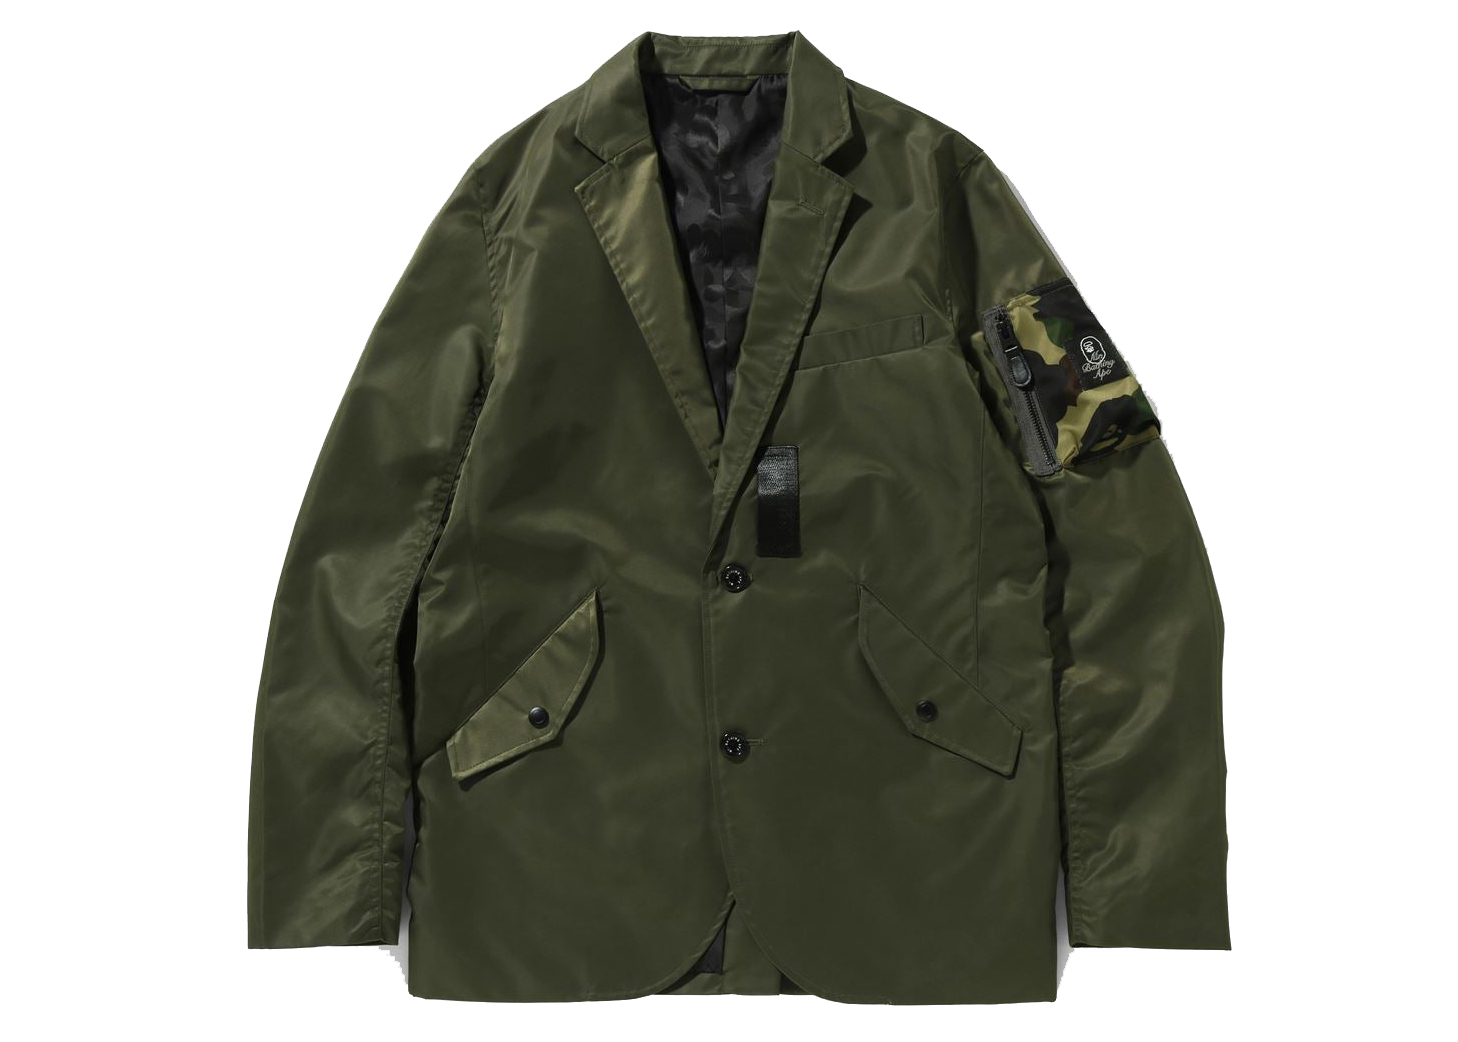 BAPE Black x Rocky Mountain Featherbed Military Jacket Olivedrab